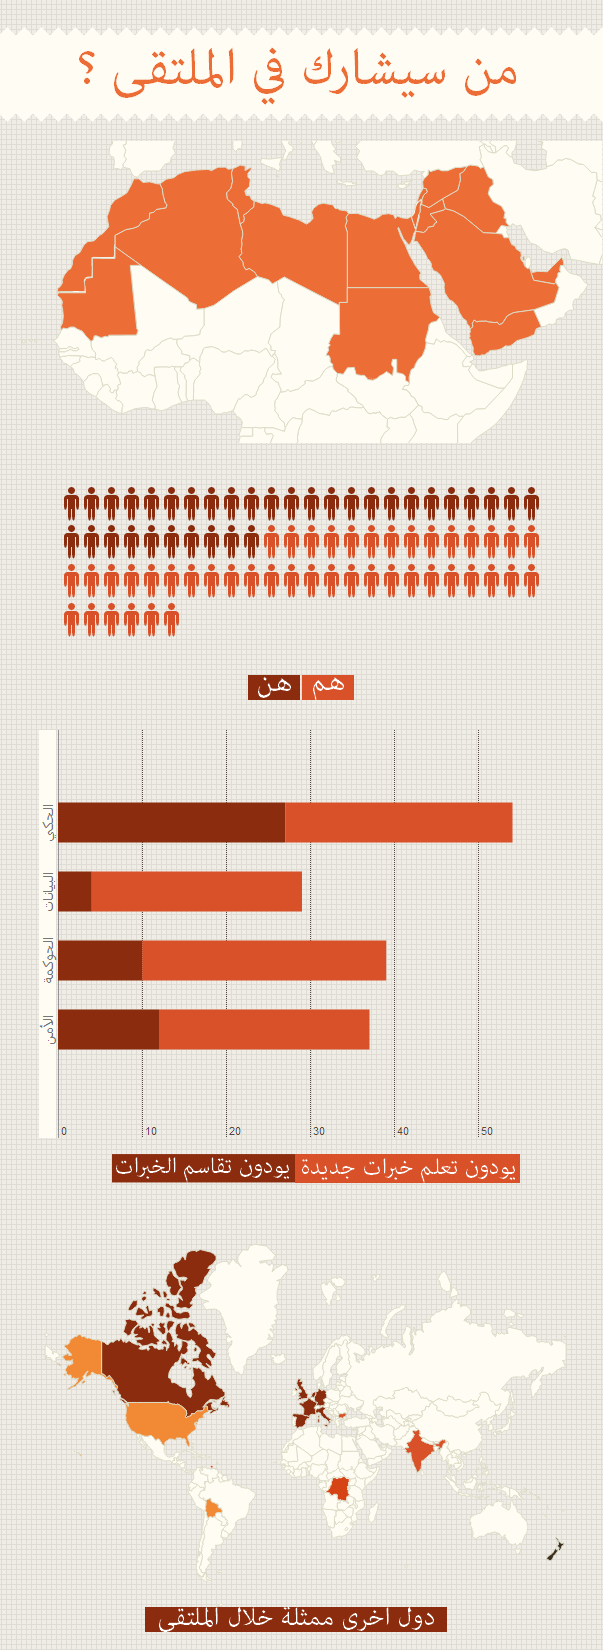 ab14 participants - an infographic